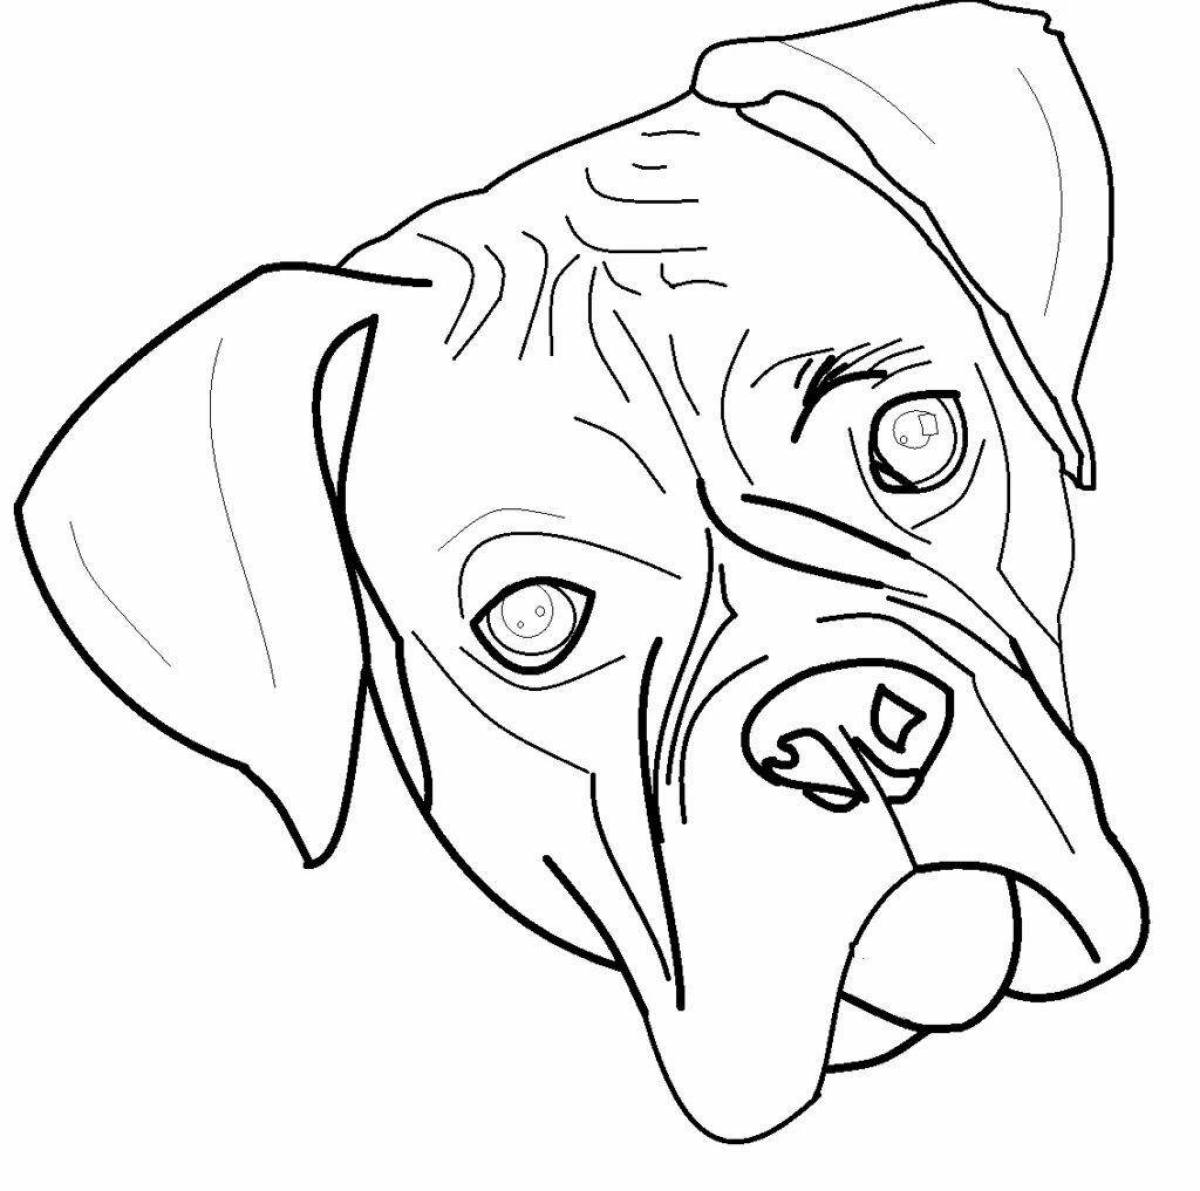 Coloring page daring boxer dog